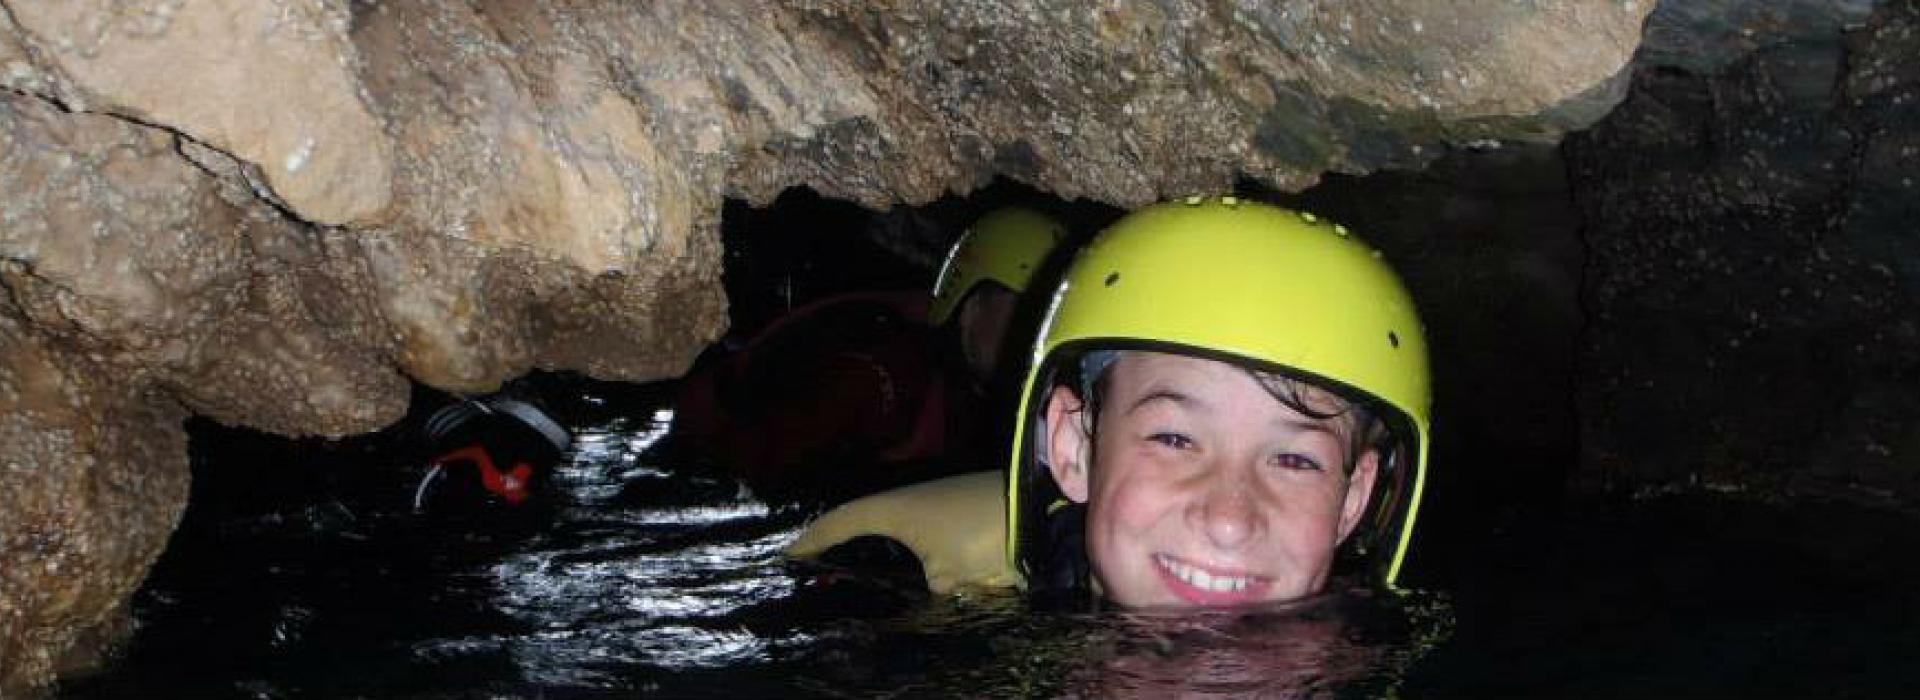 school kids coasteering in a cave